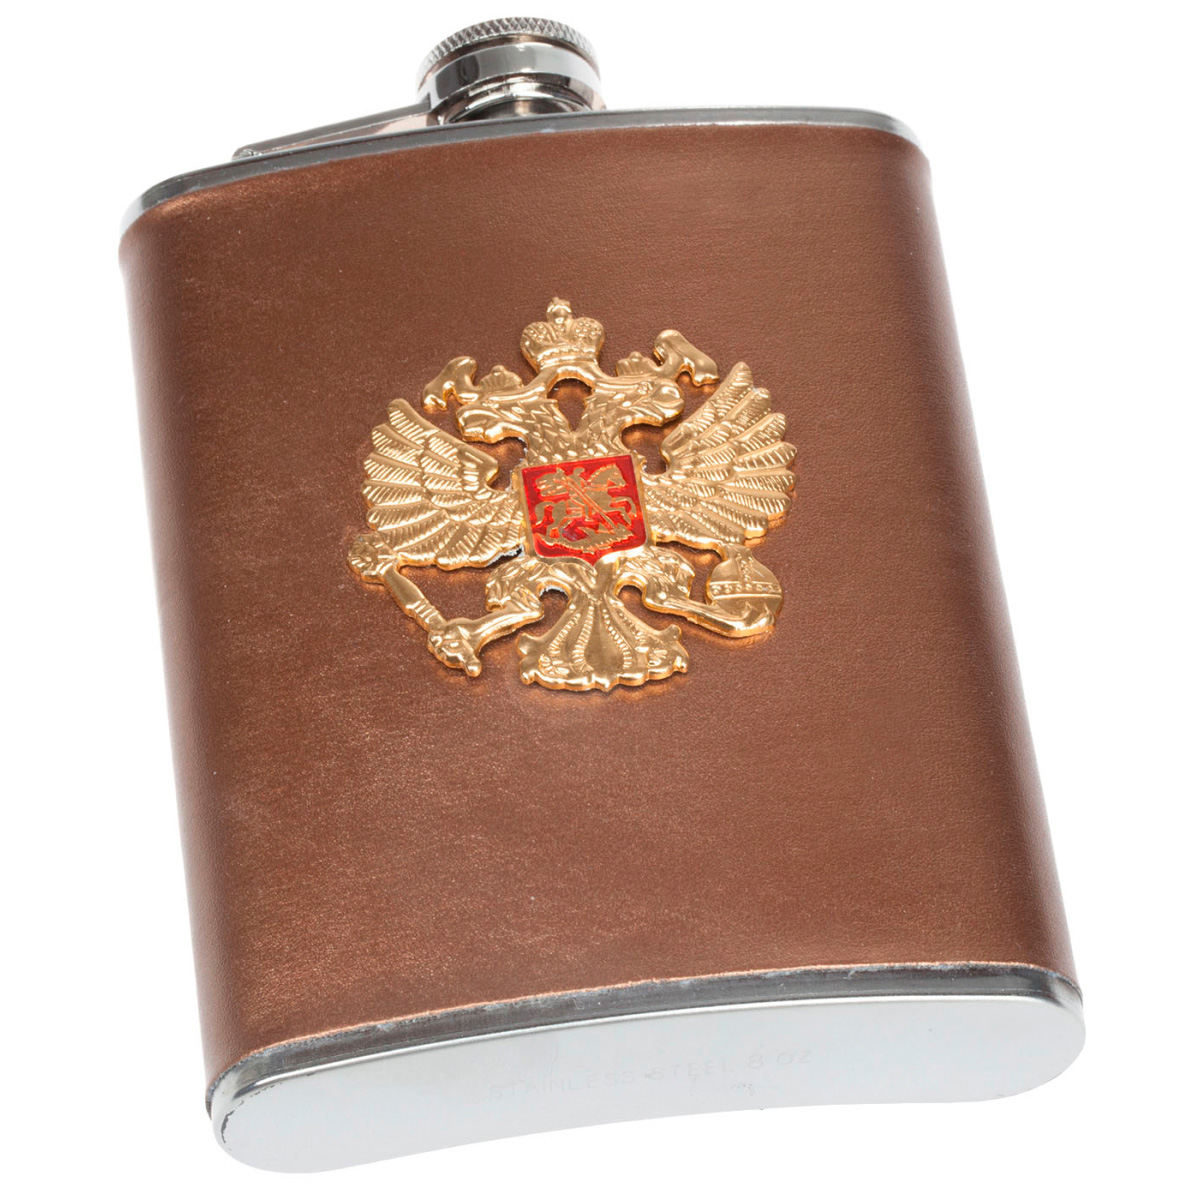 Фляга Voenpro бронза, кожа, герб РФ, 9 унций